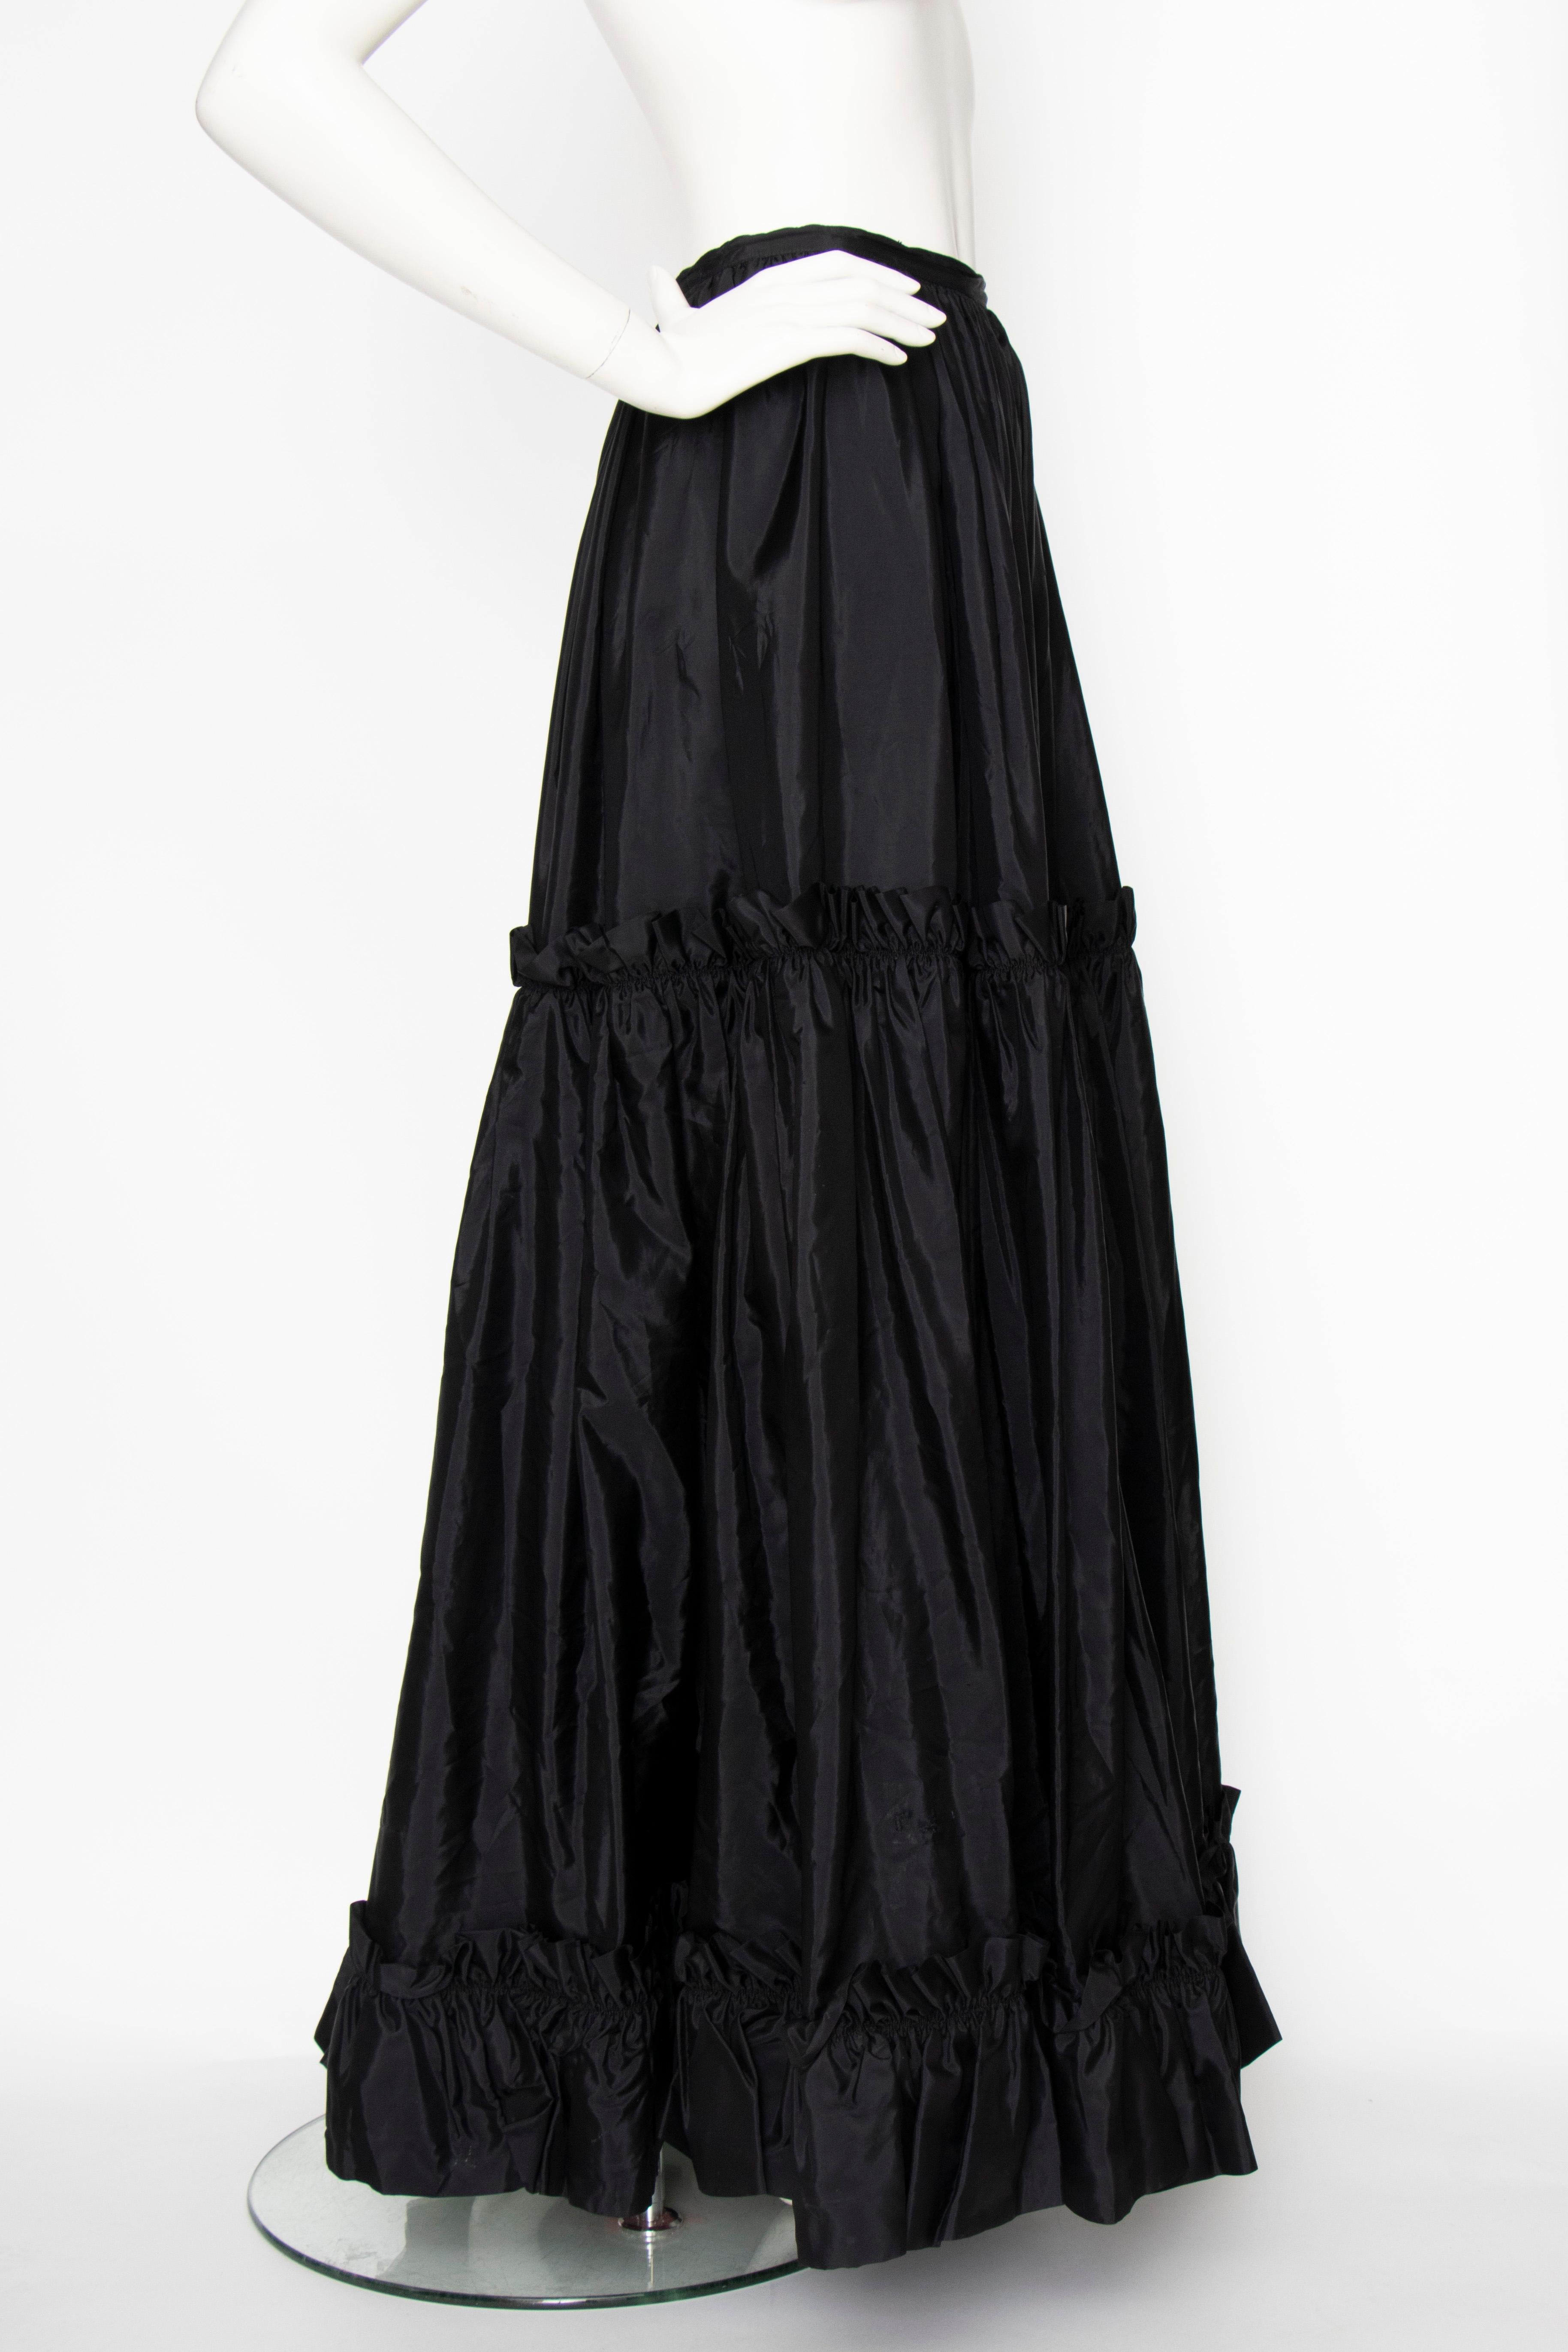 A 1980s Vintage Yves Saint Laurent Rive Gauche Black Silk Taffeta Skirt In Good Condition For Sale In Copenhagen, DK